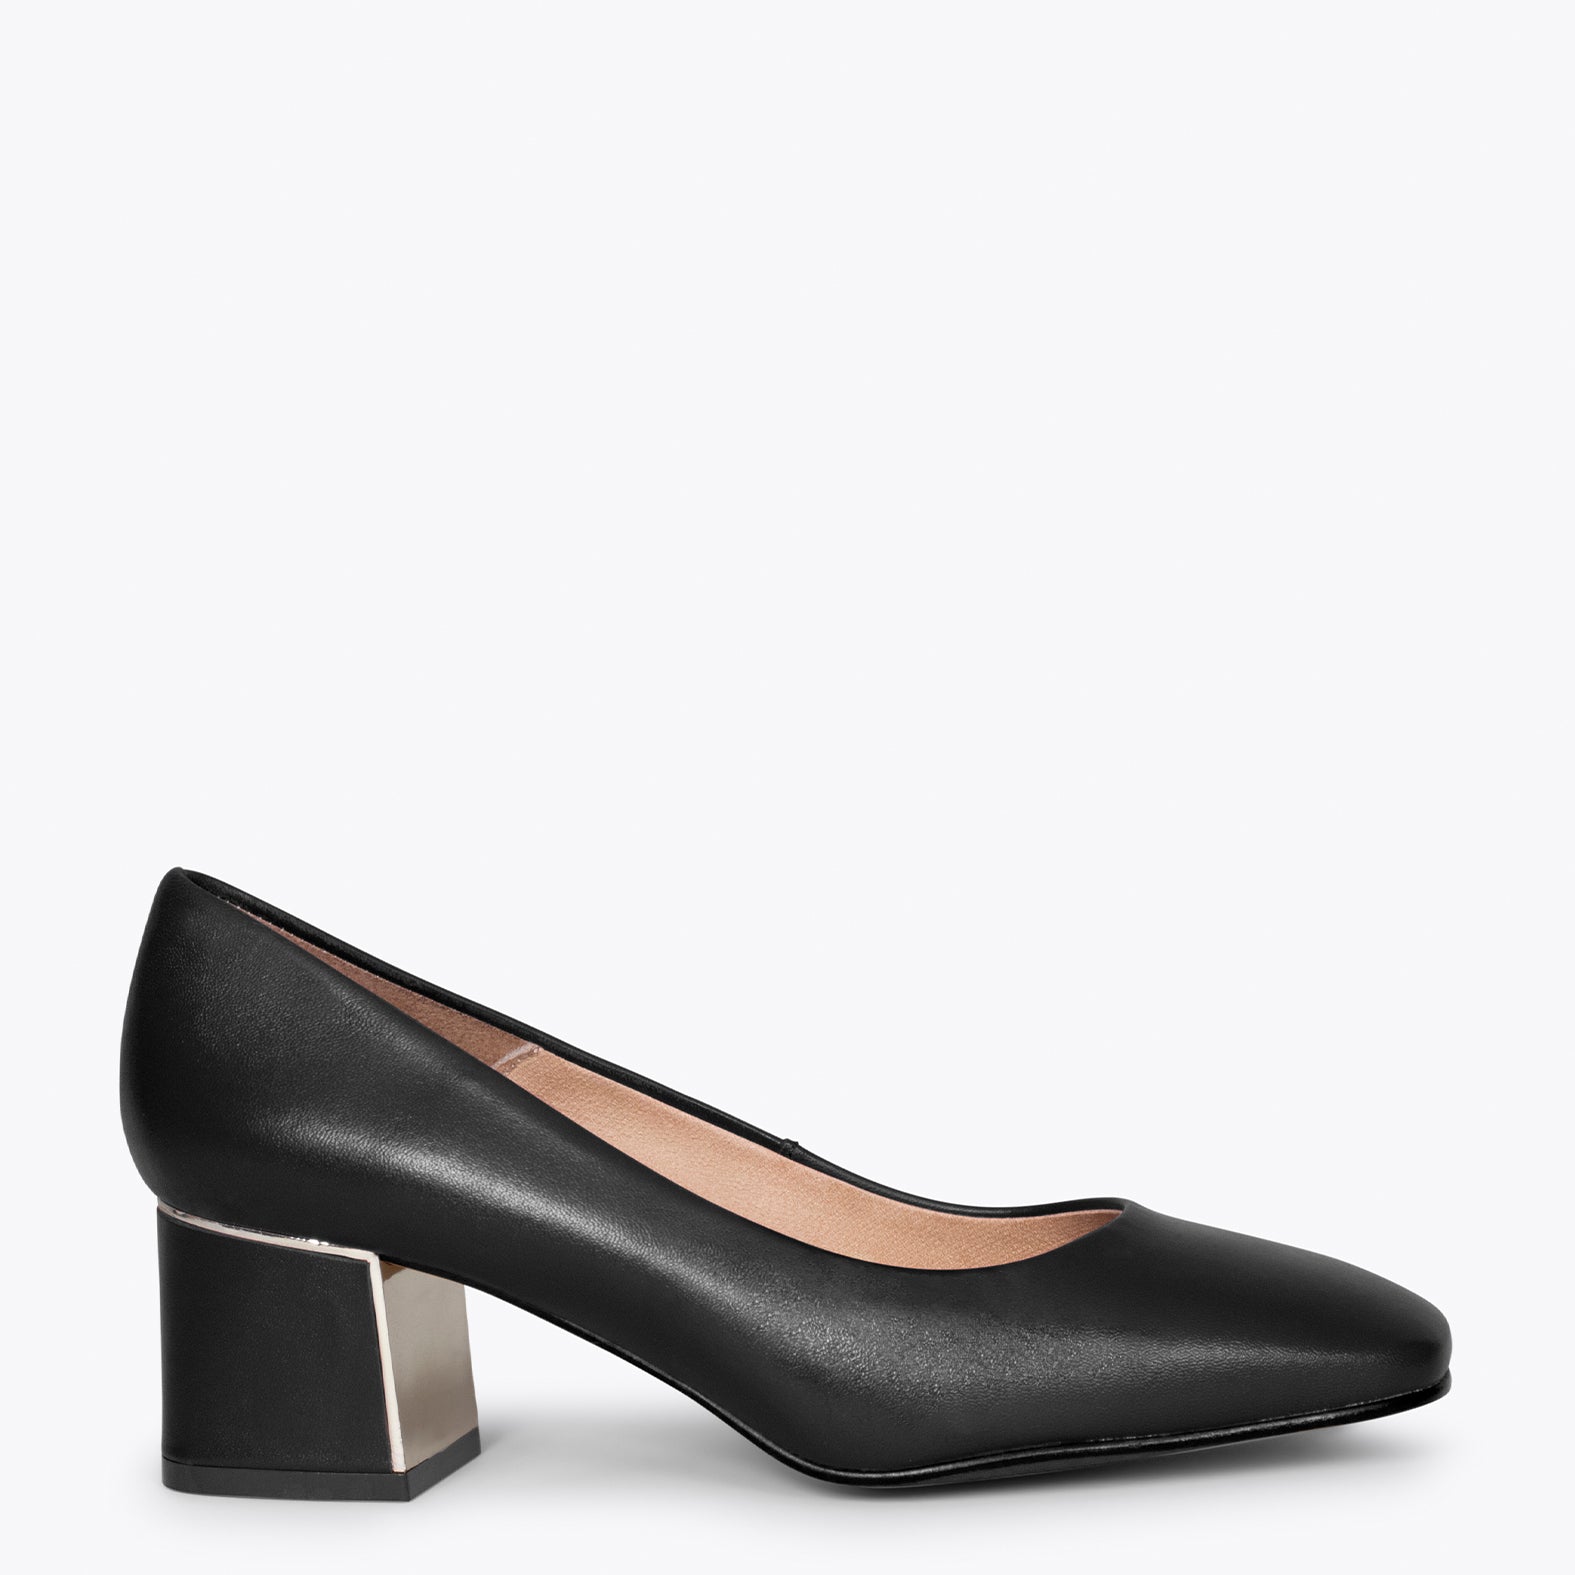 FEMME – Zapatos de tacón bajo con puntera ancha NEGRO